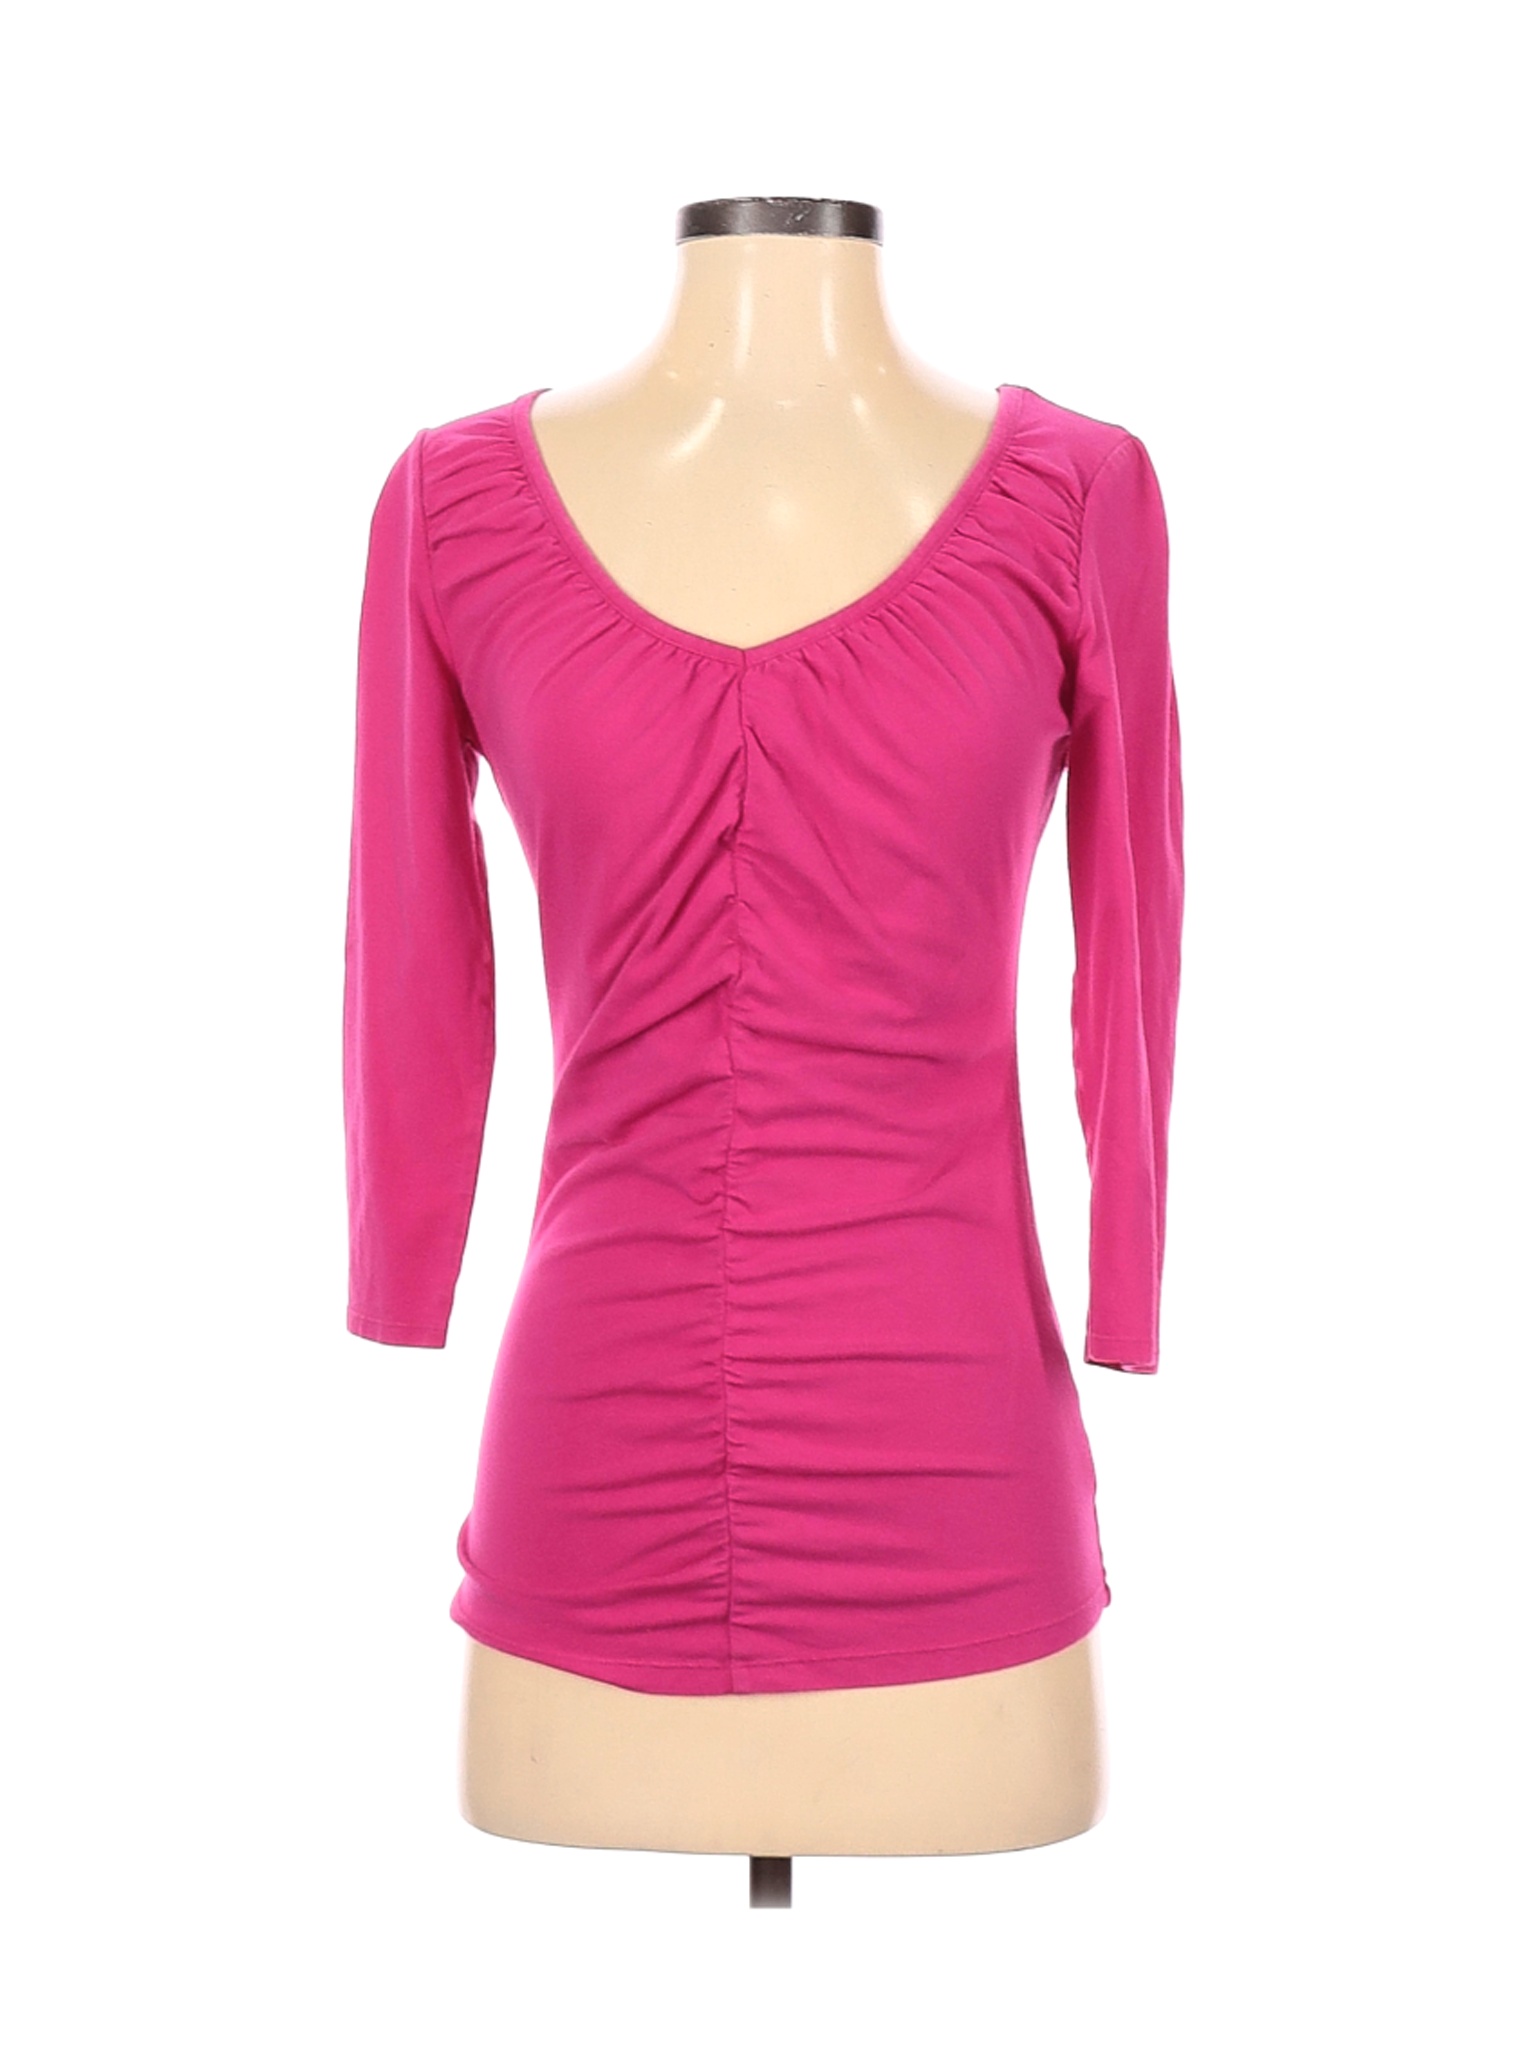 New York & Company Women Pink 3/4 Sleeve Top S | eBay